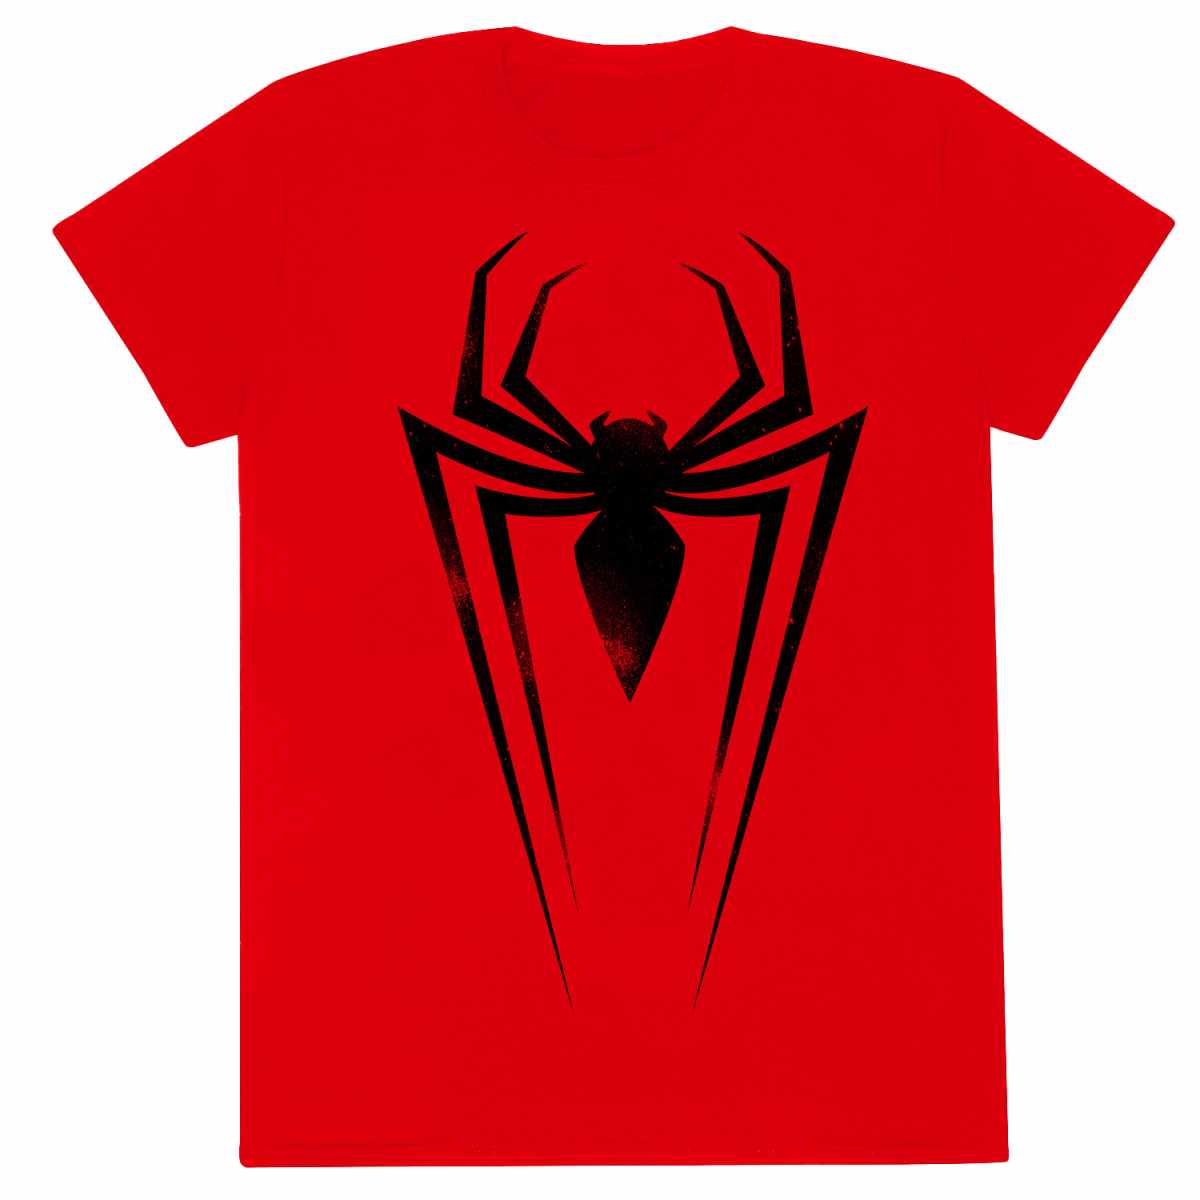 Marvel Comics Spider-Man Black Spider Symbol T-Shirt